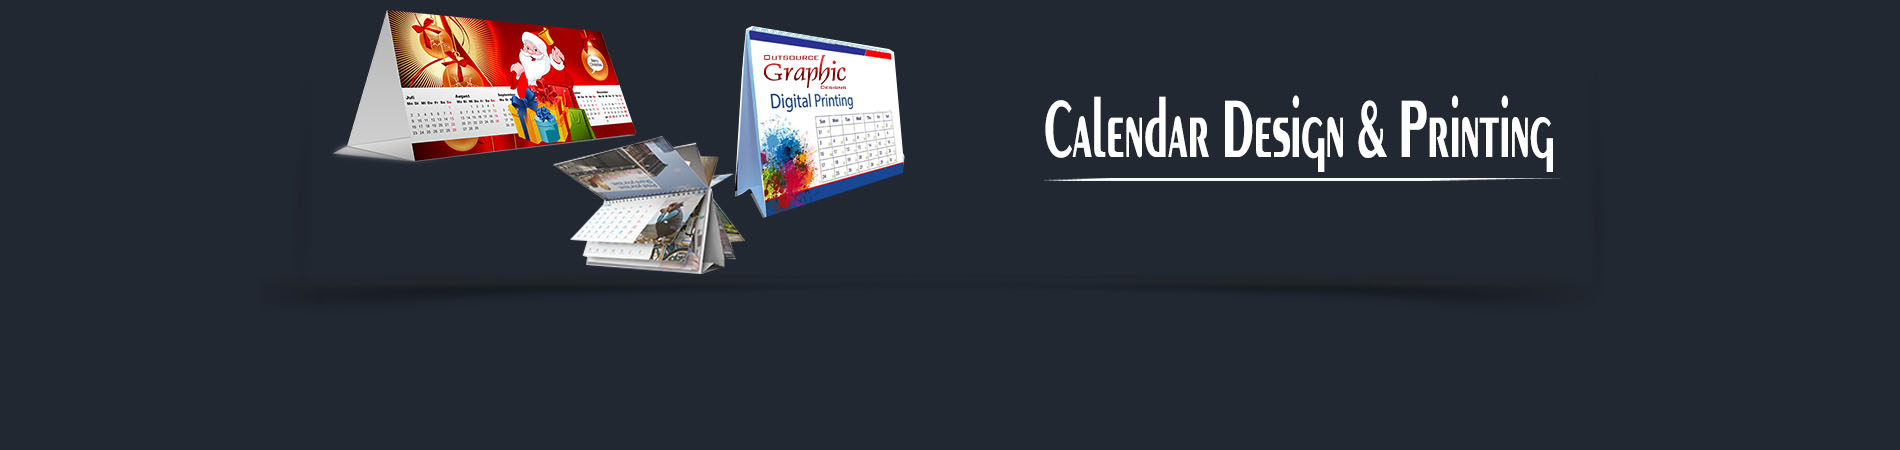 Calendar Design & Printing in India